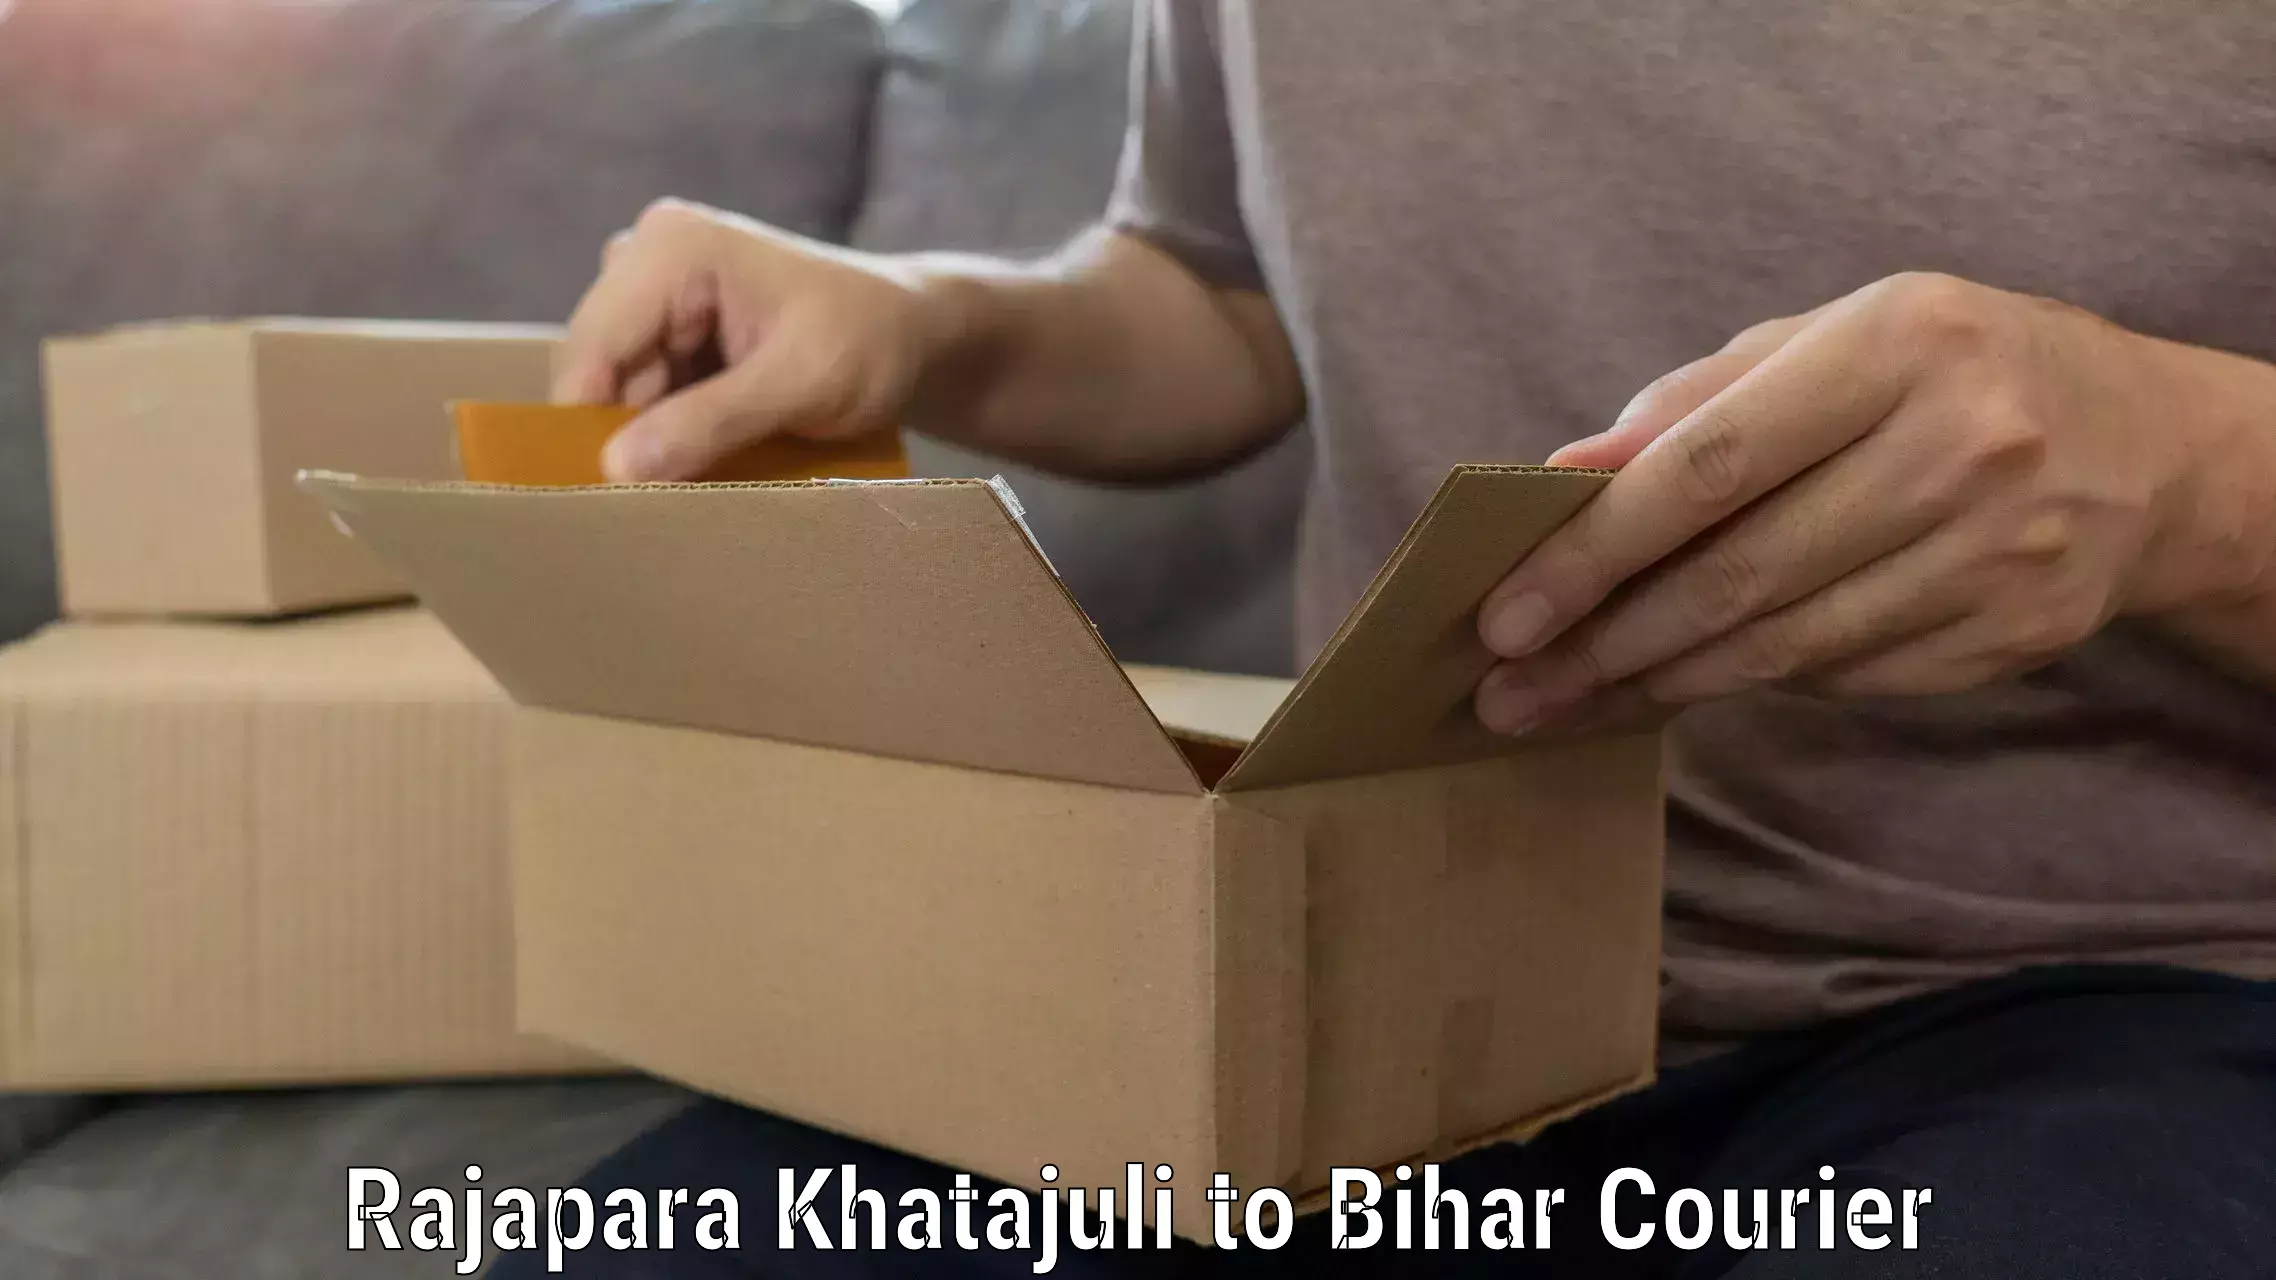 Quality moving company Rajapara Khatajuli to Patna